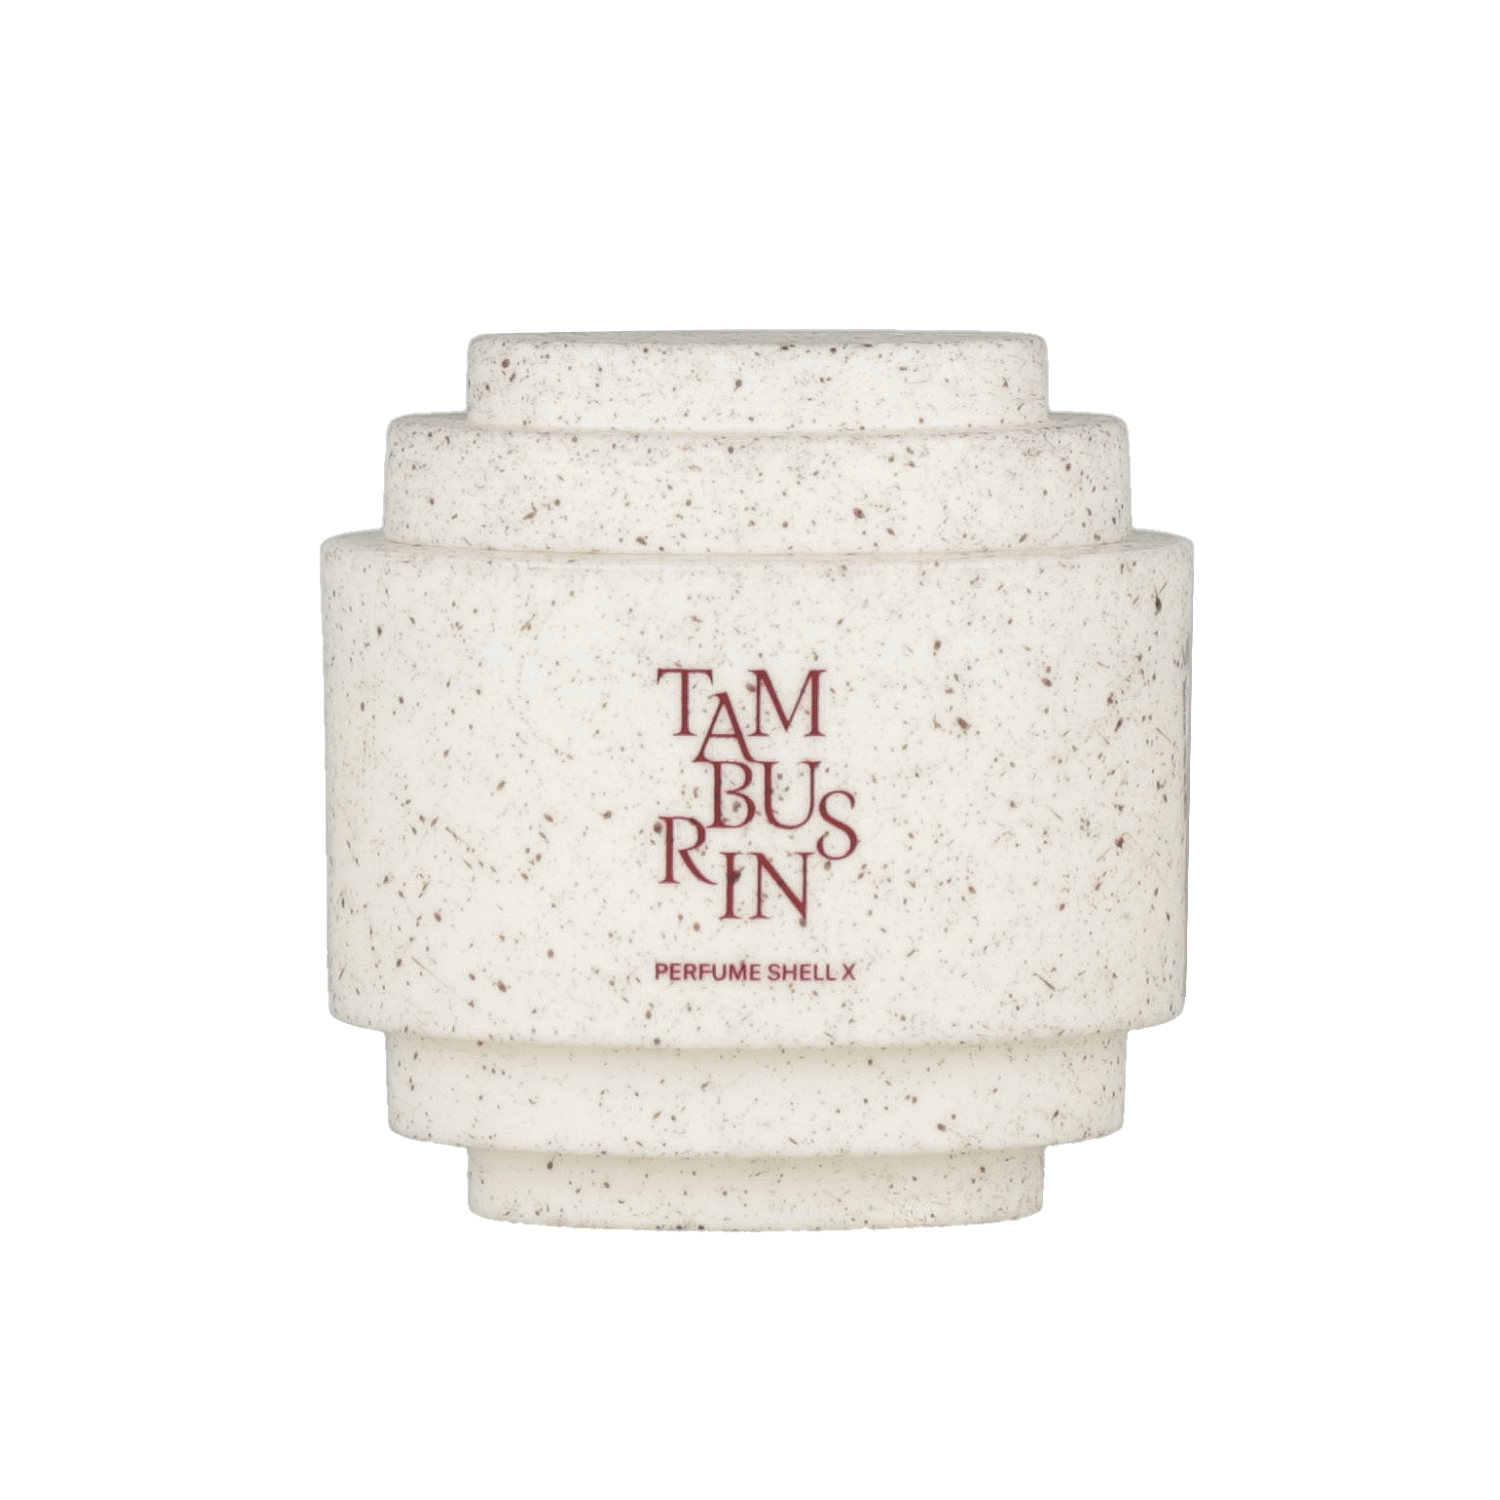 TAMBURINS PERFUME SHELL X Hand Cream - BERGA SANDAL 30ml - DODOSKIN